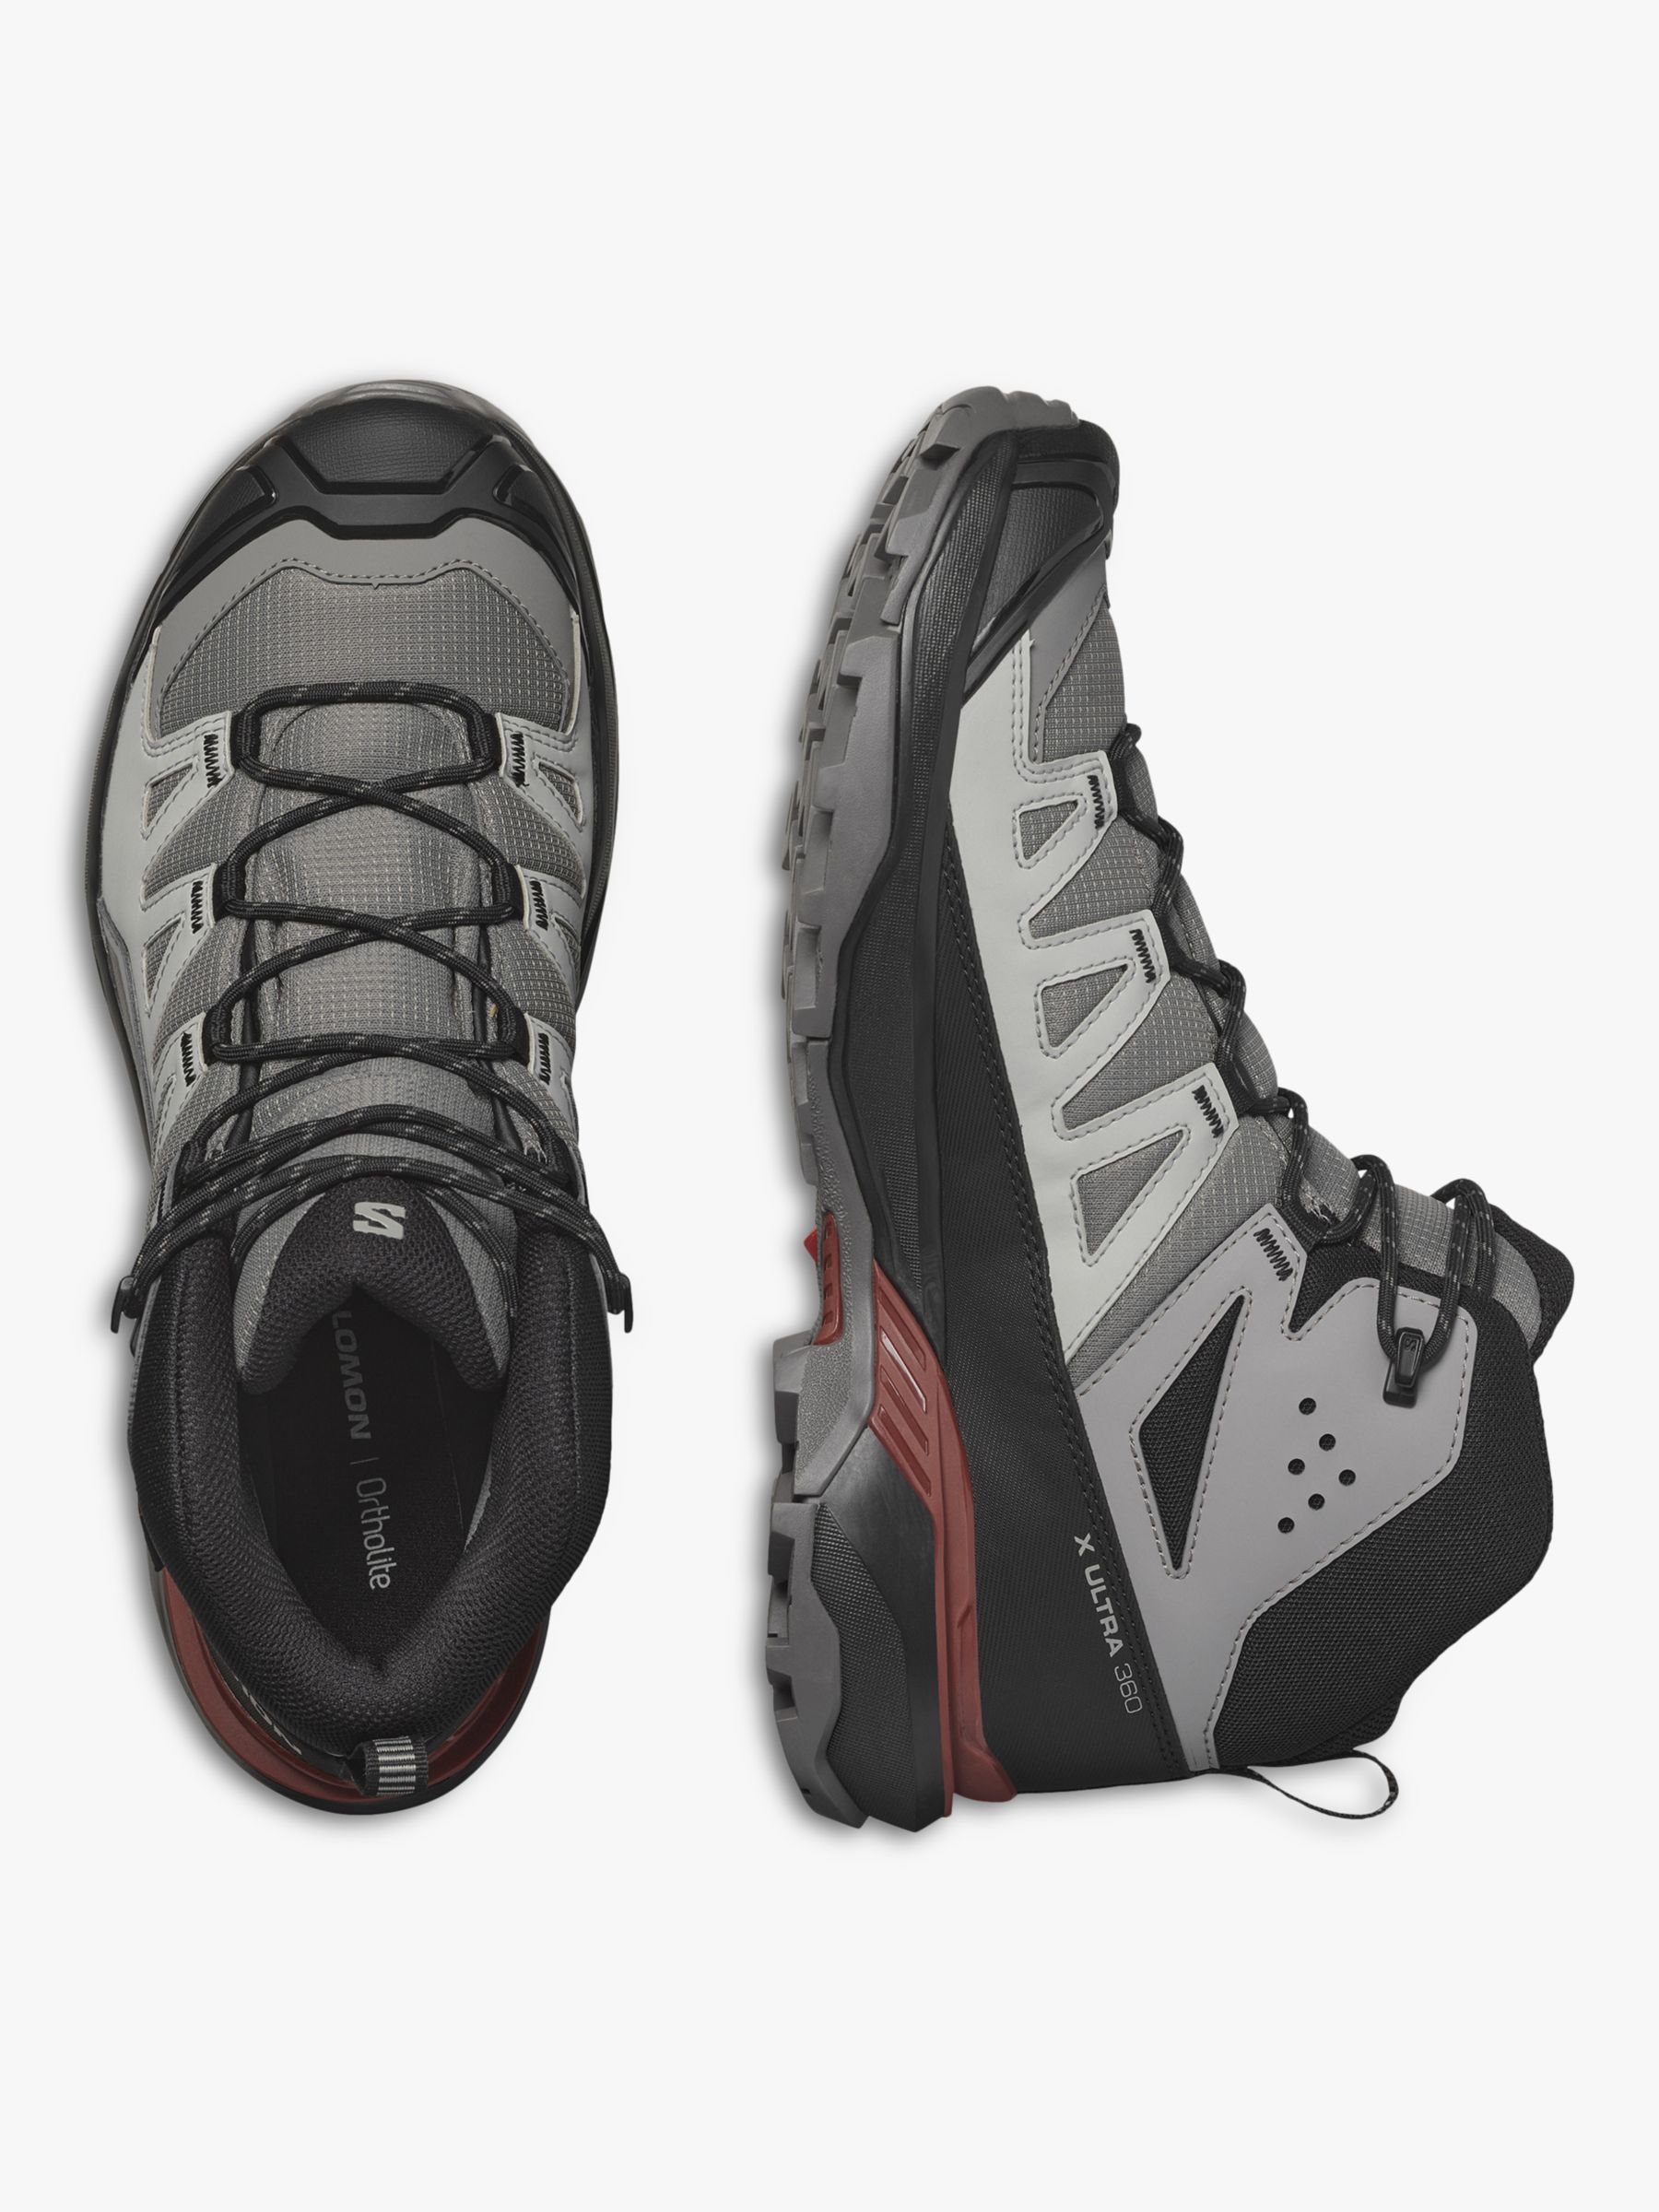 Buy Salomon X Ultra 360 Mid Gore-Tex Men's Boots Online at johnlewis.com